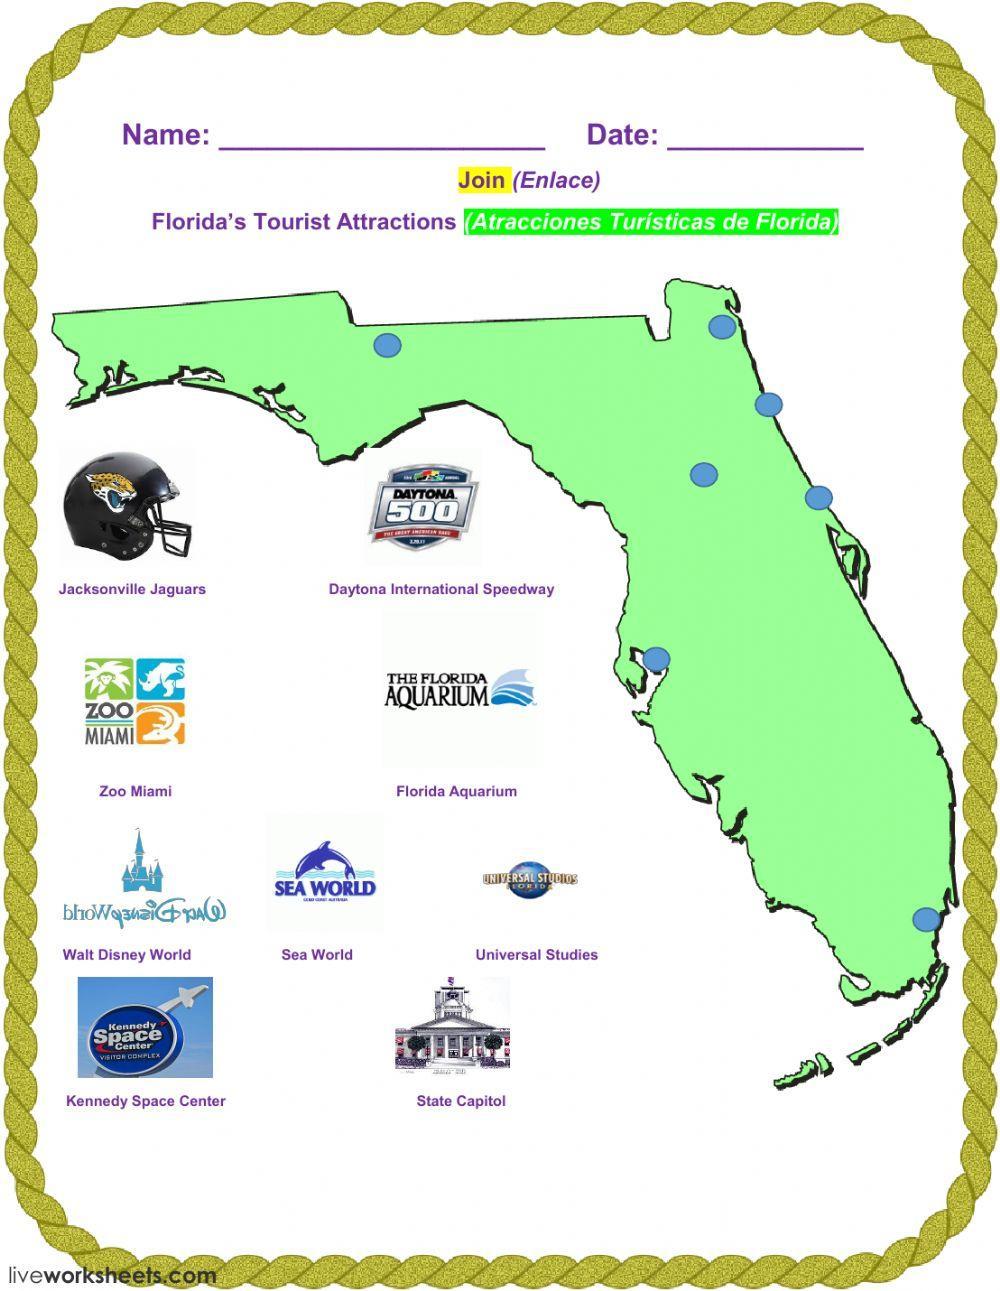 Florida’s Tourist Attractions - 1B